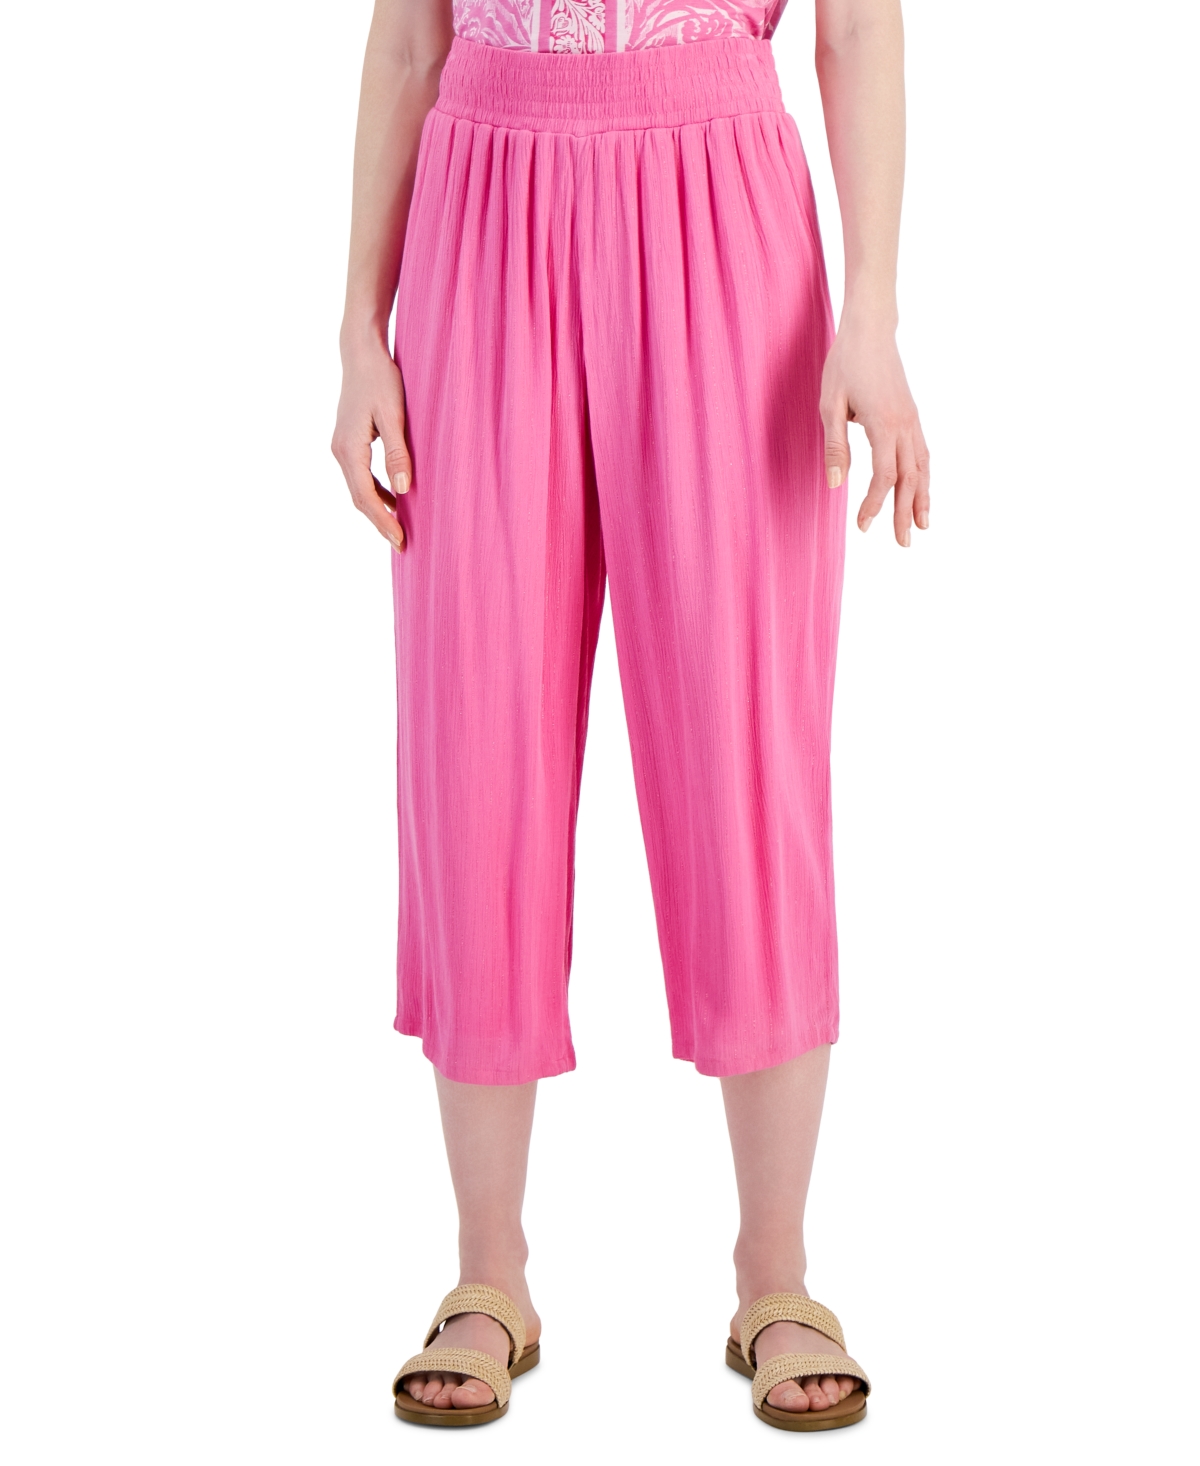 Women's Metallic Gauze Pull-On Capri Pants, Created for Macy's - Bright Pink